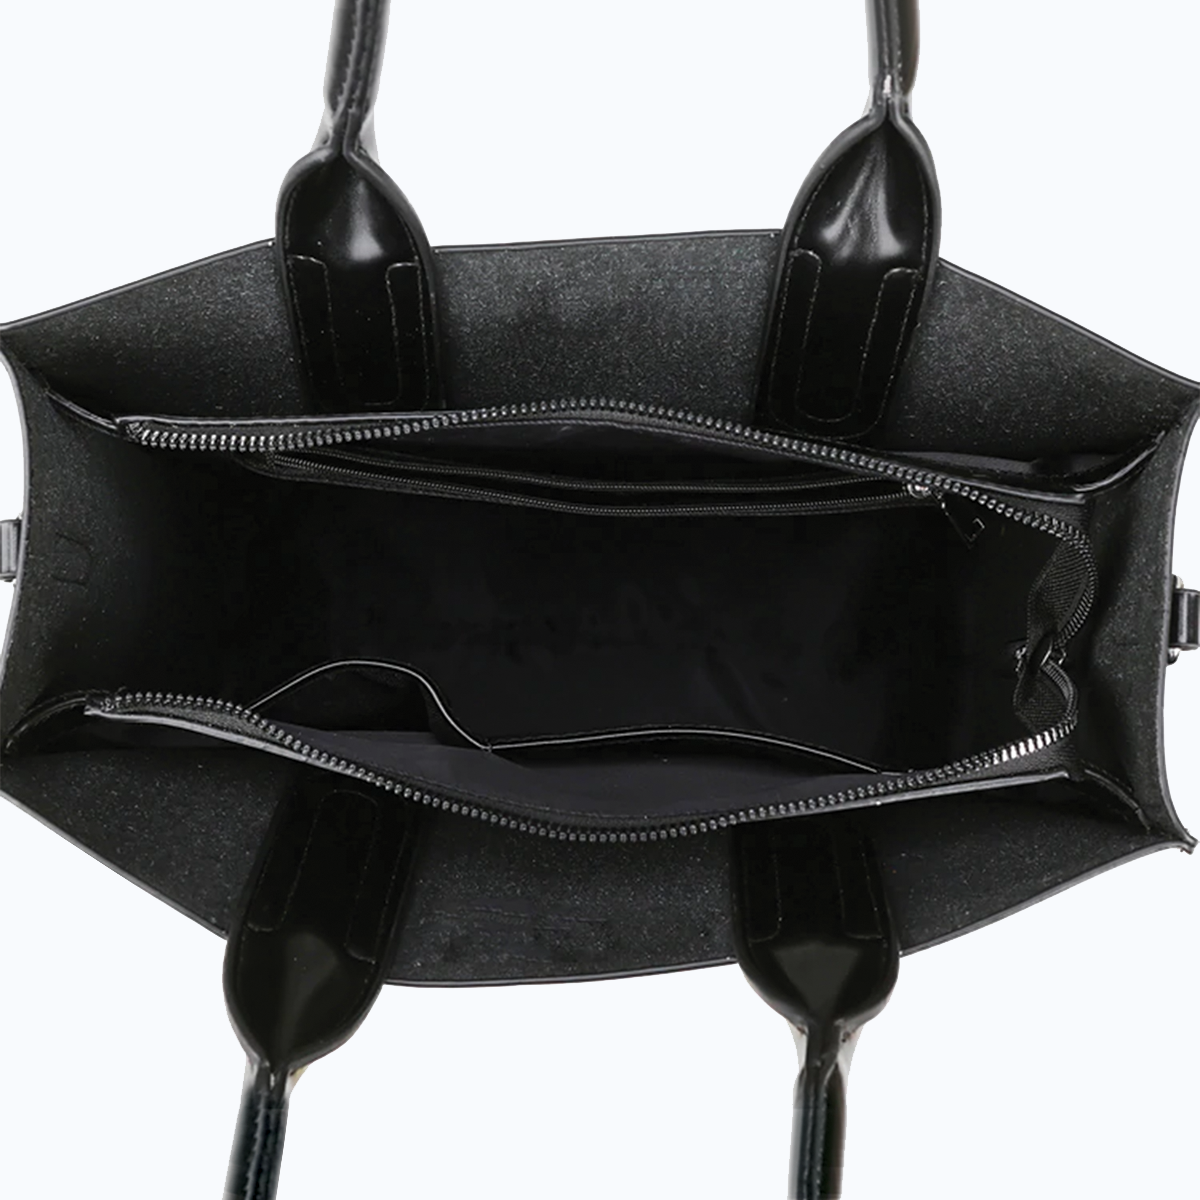 Reduce Stress At Work With French Bulldog - Luxury Handbag V2